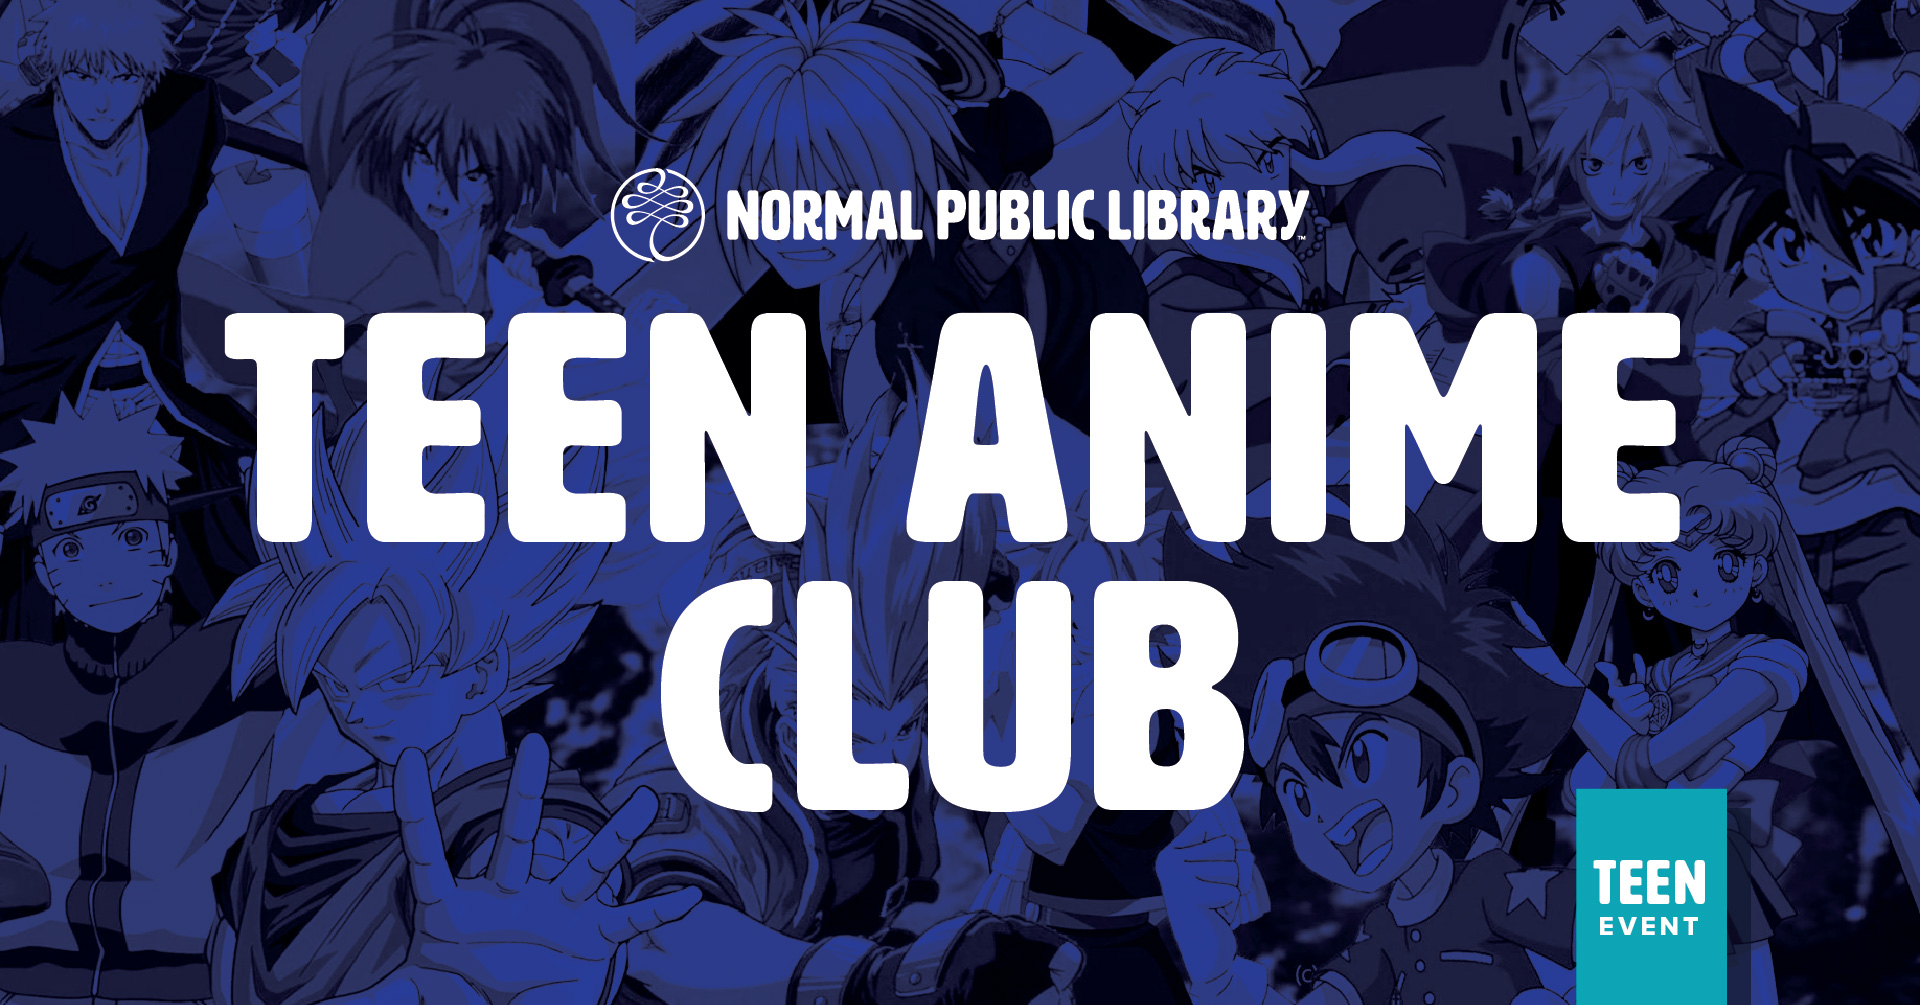 Abby the Librarian: OMG Anime Club!